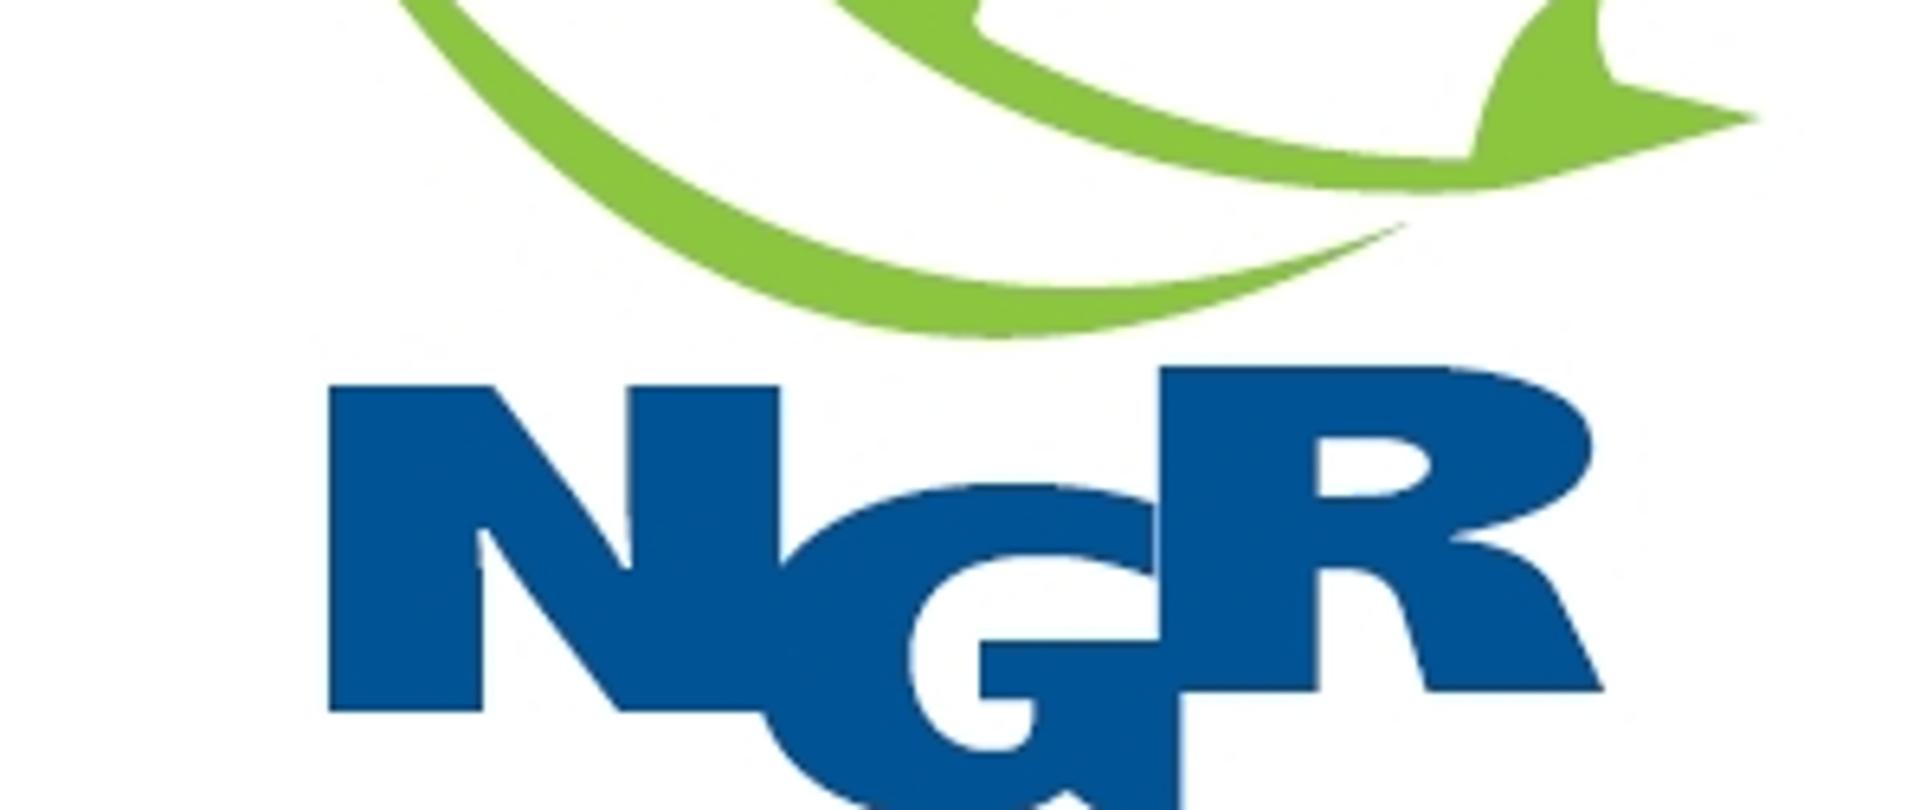 NGR logo